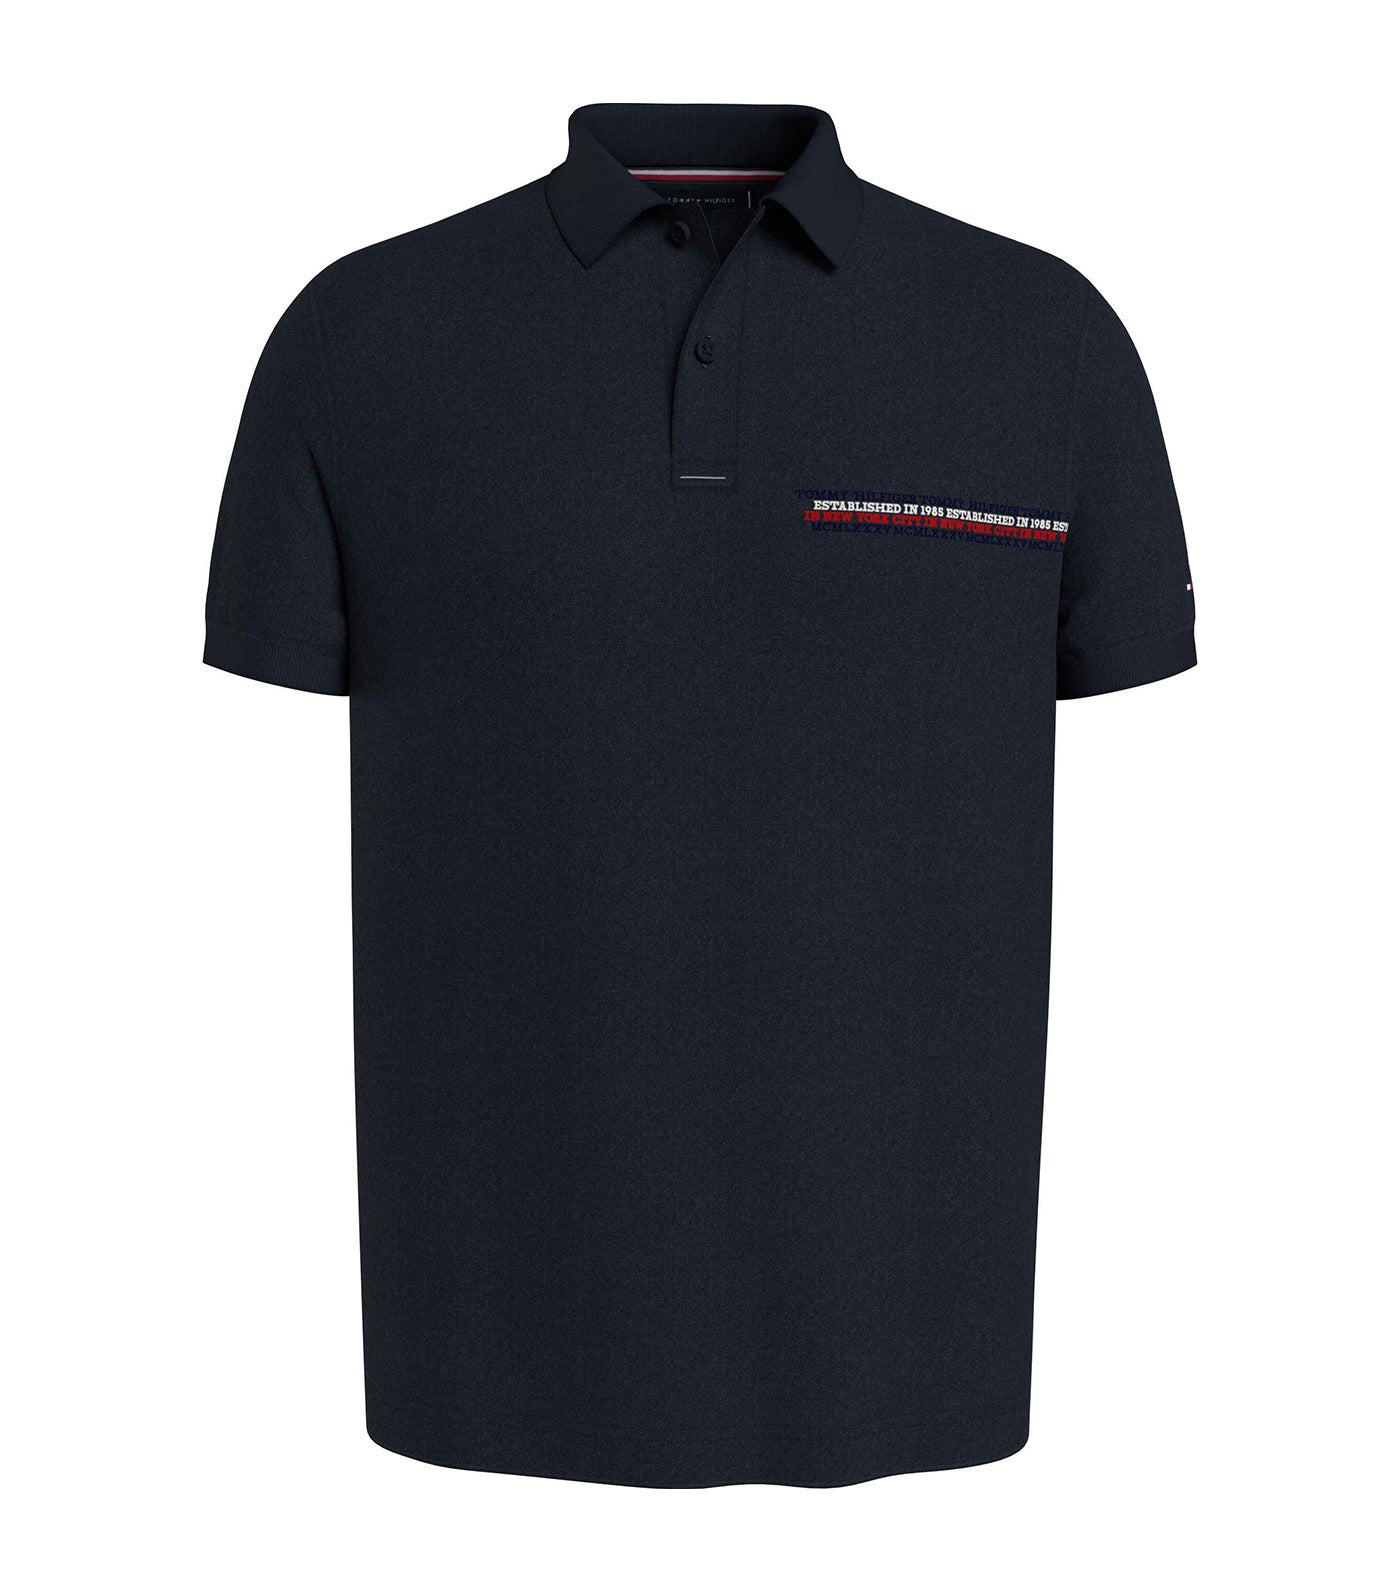 TOMMY HILFIGER - Men's regular colorblock polo shirt - Size 